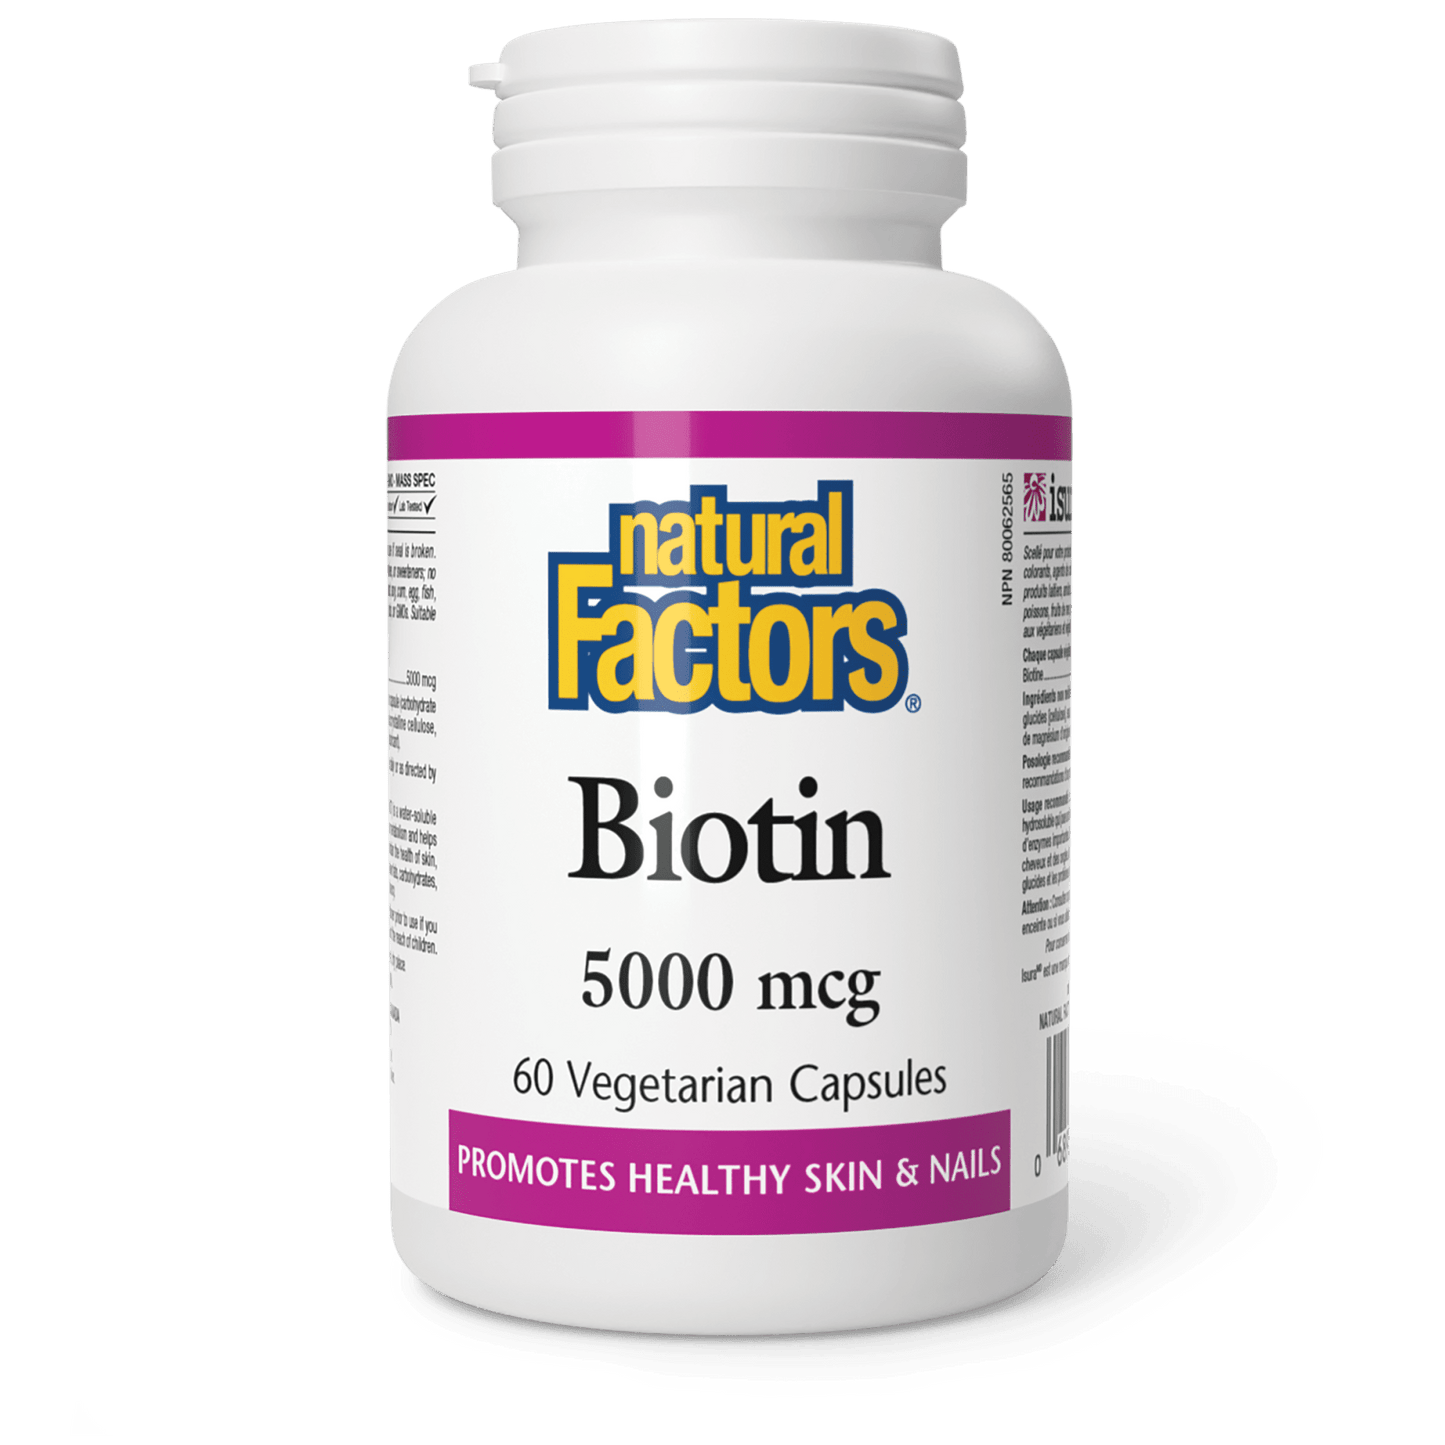 Biotin 5000 mcg, Natural Factors|v|image|1262